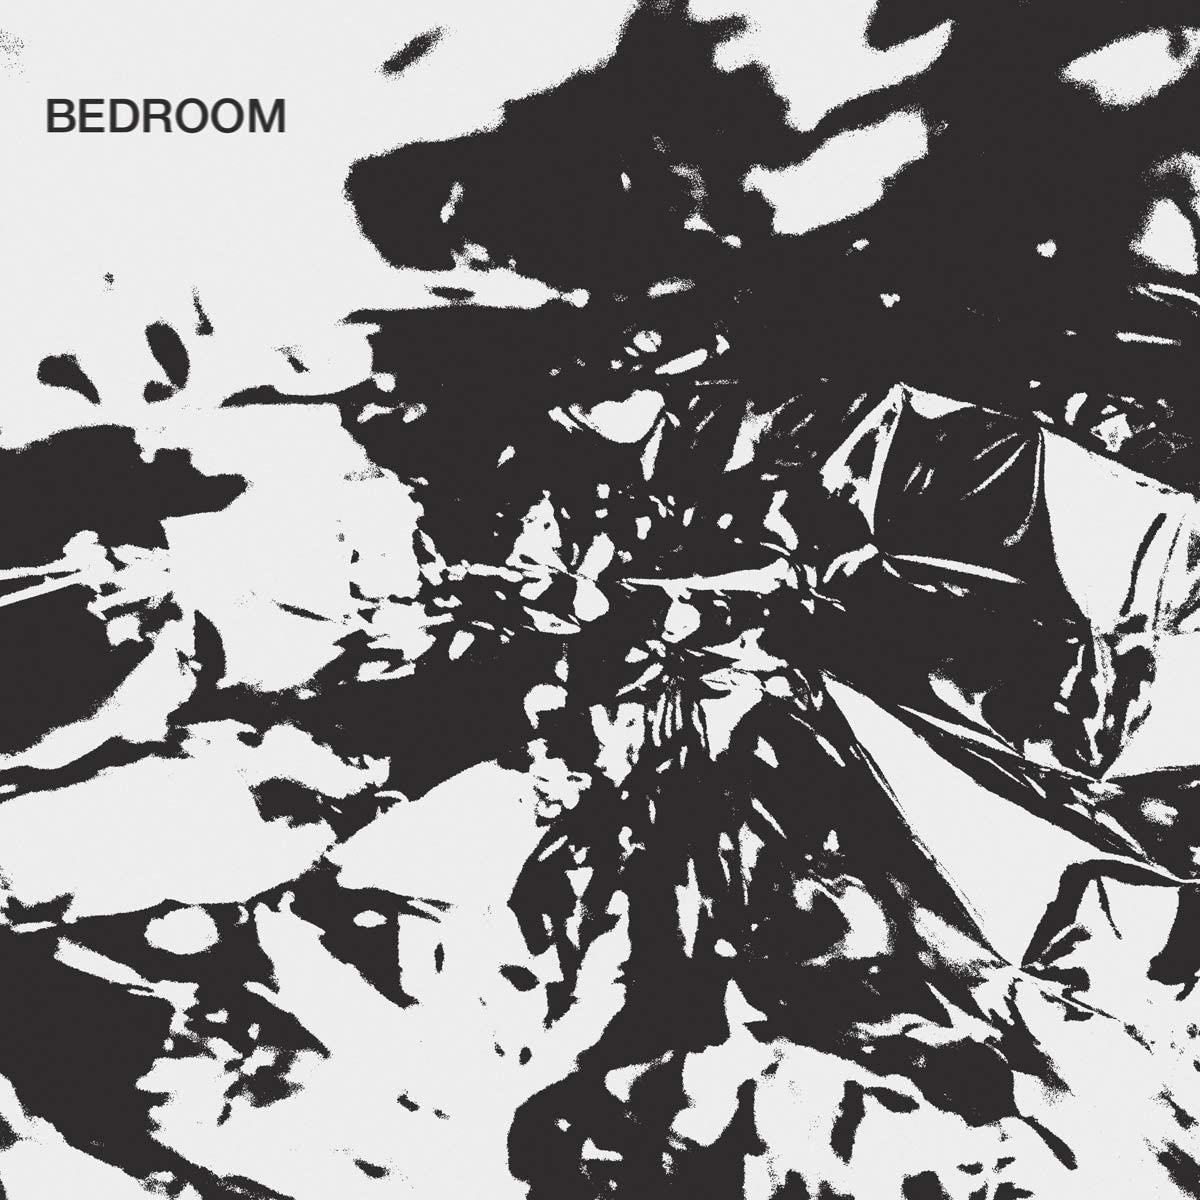 bdrmm - Bedroom